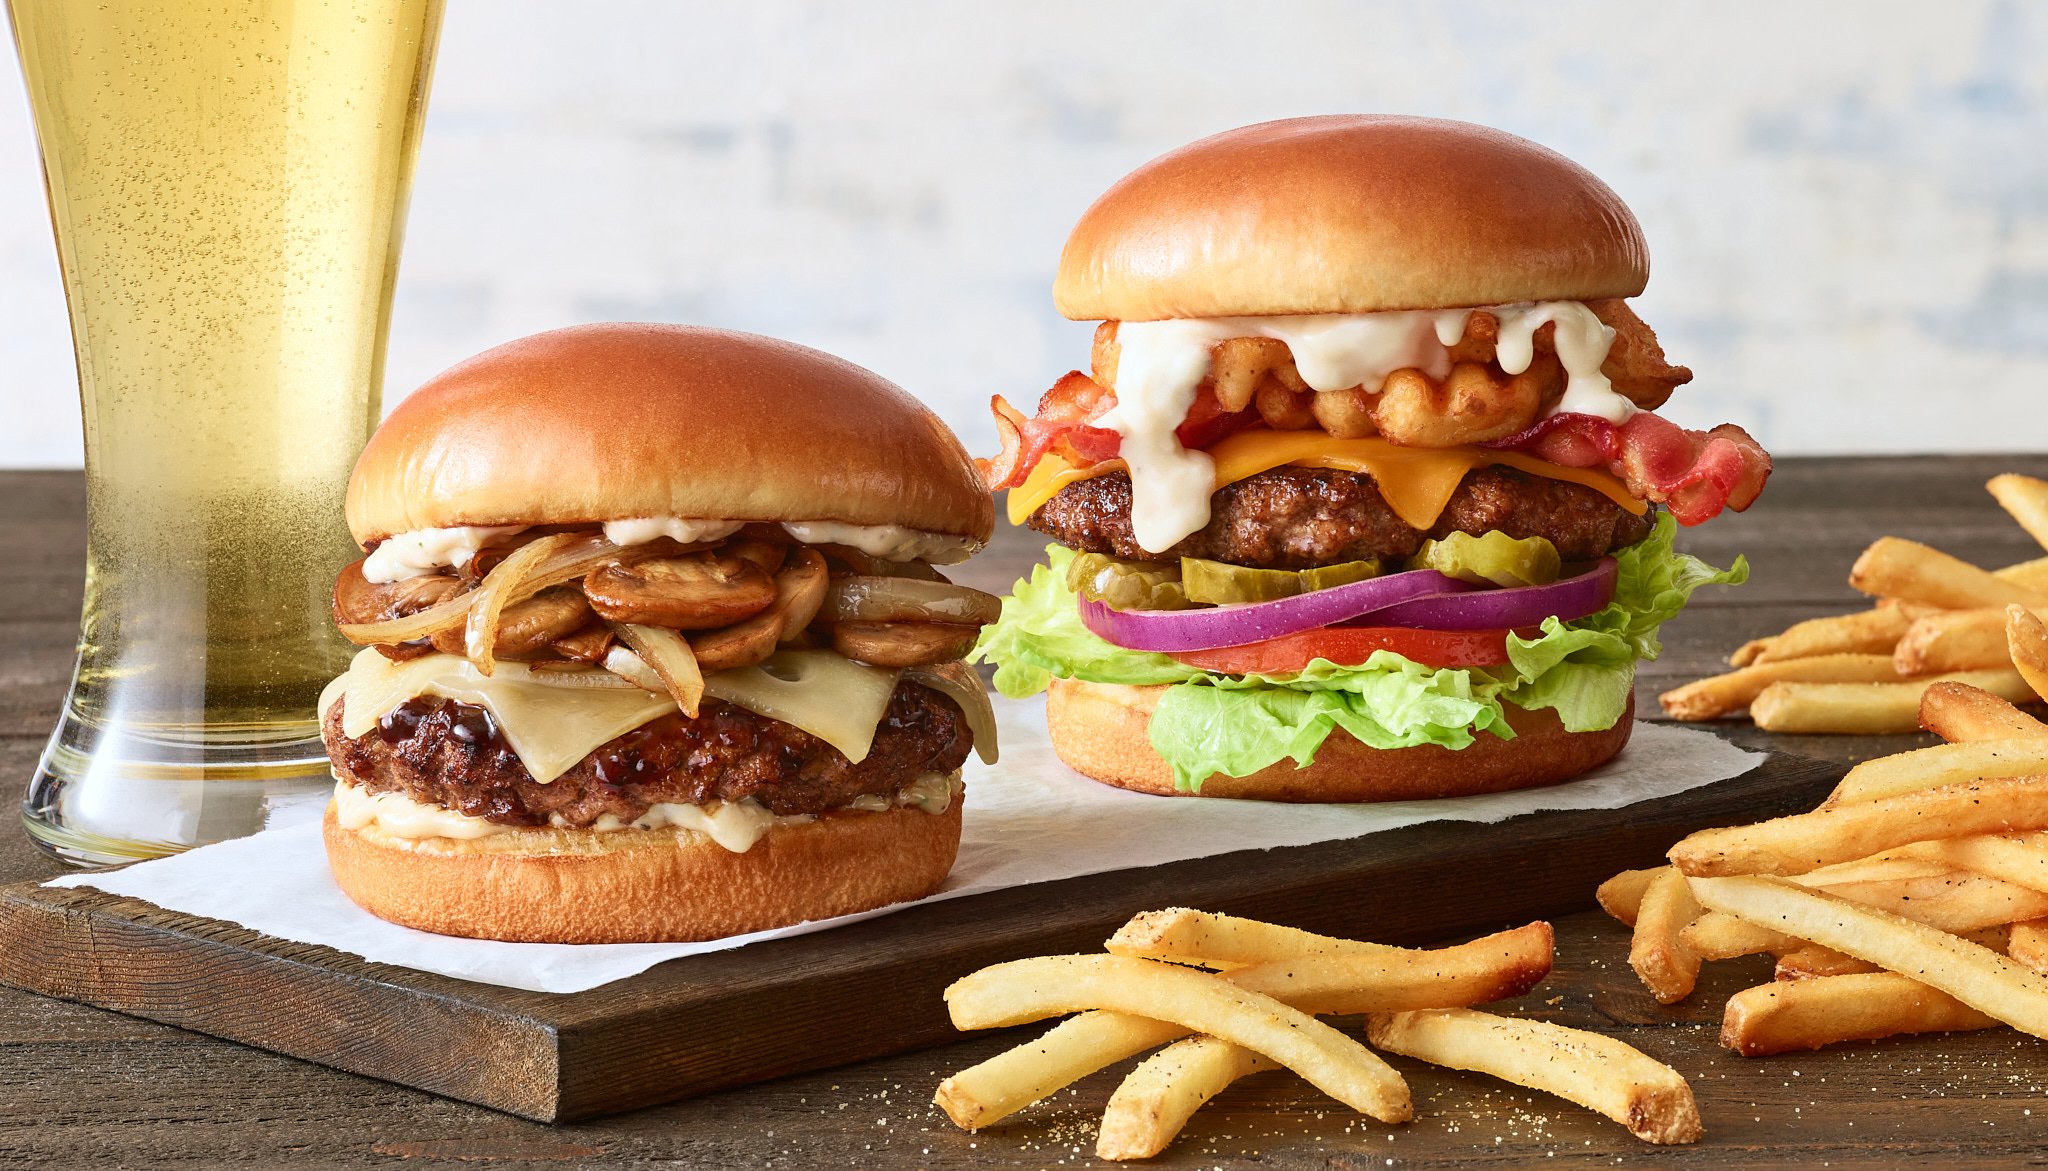 1-Bourbon-Street-Burger-Brew-Pub-Waffle-Fry-Beer-Cheeseburger-w-fries-&-Michelob-Ultra-Brewtus-012622-R1-V5.jpg